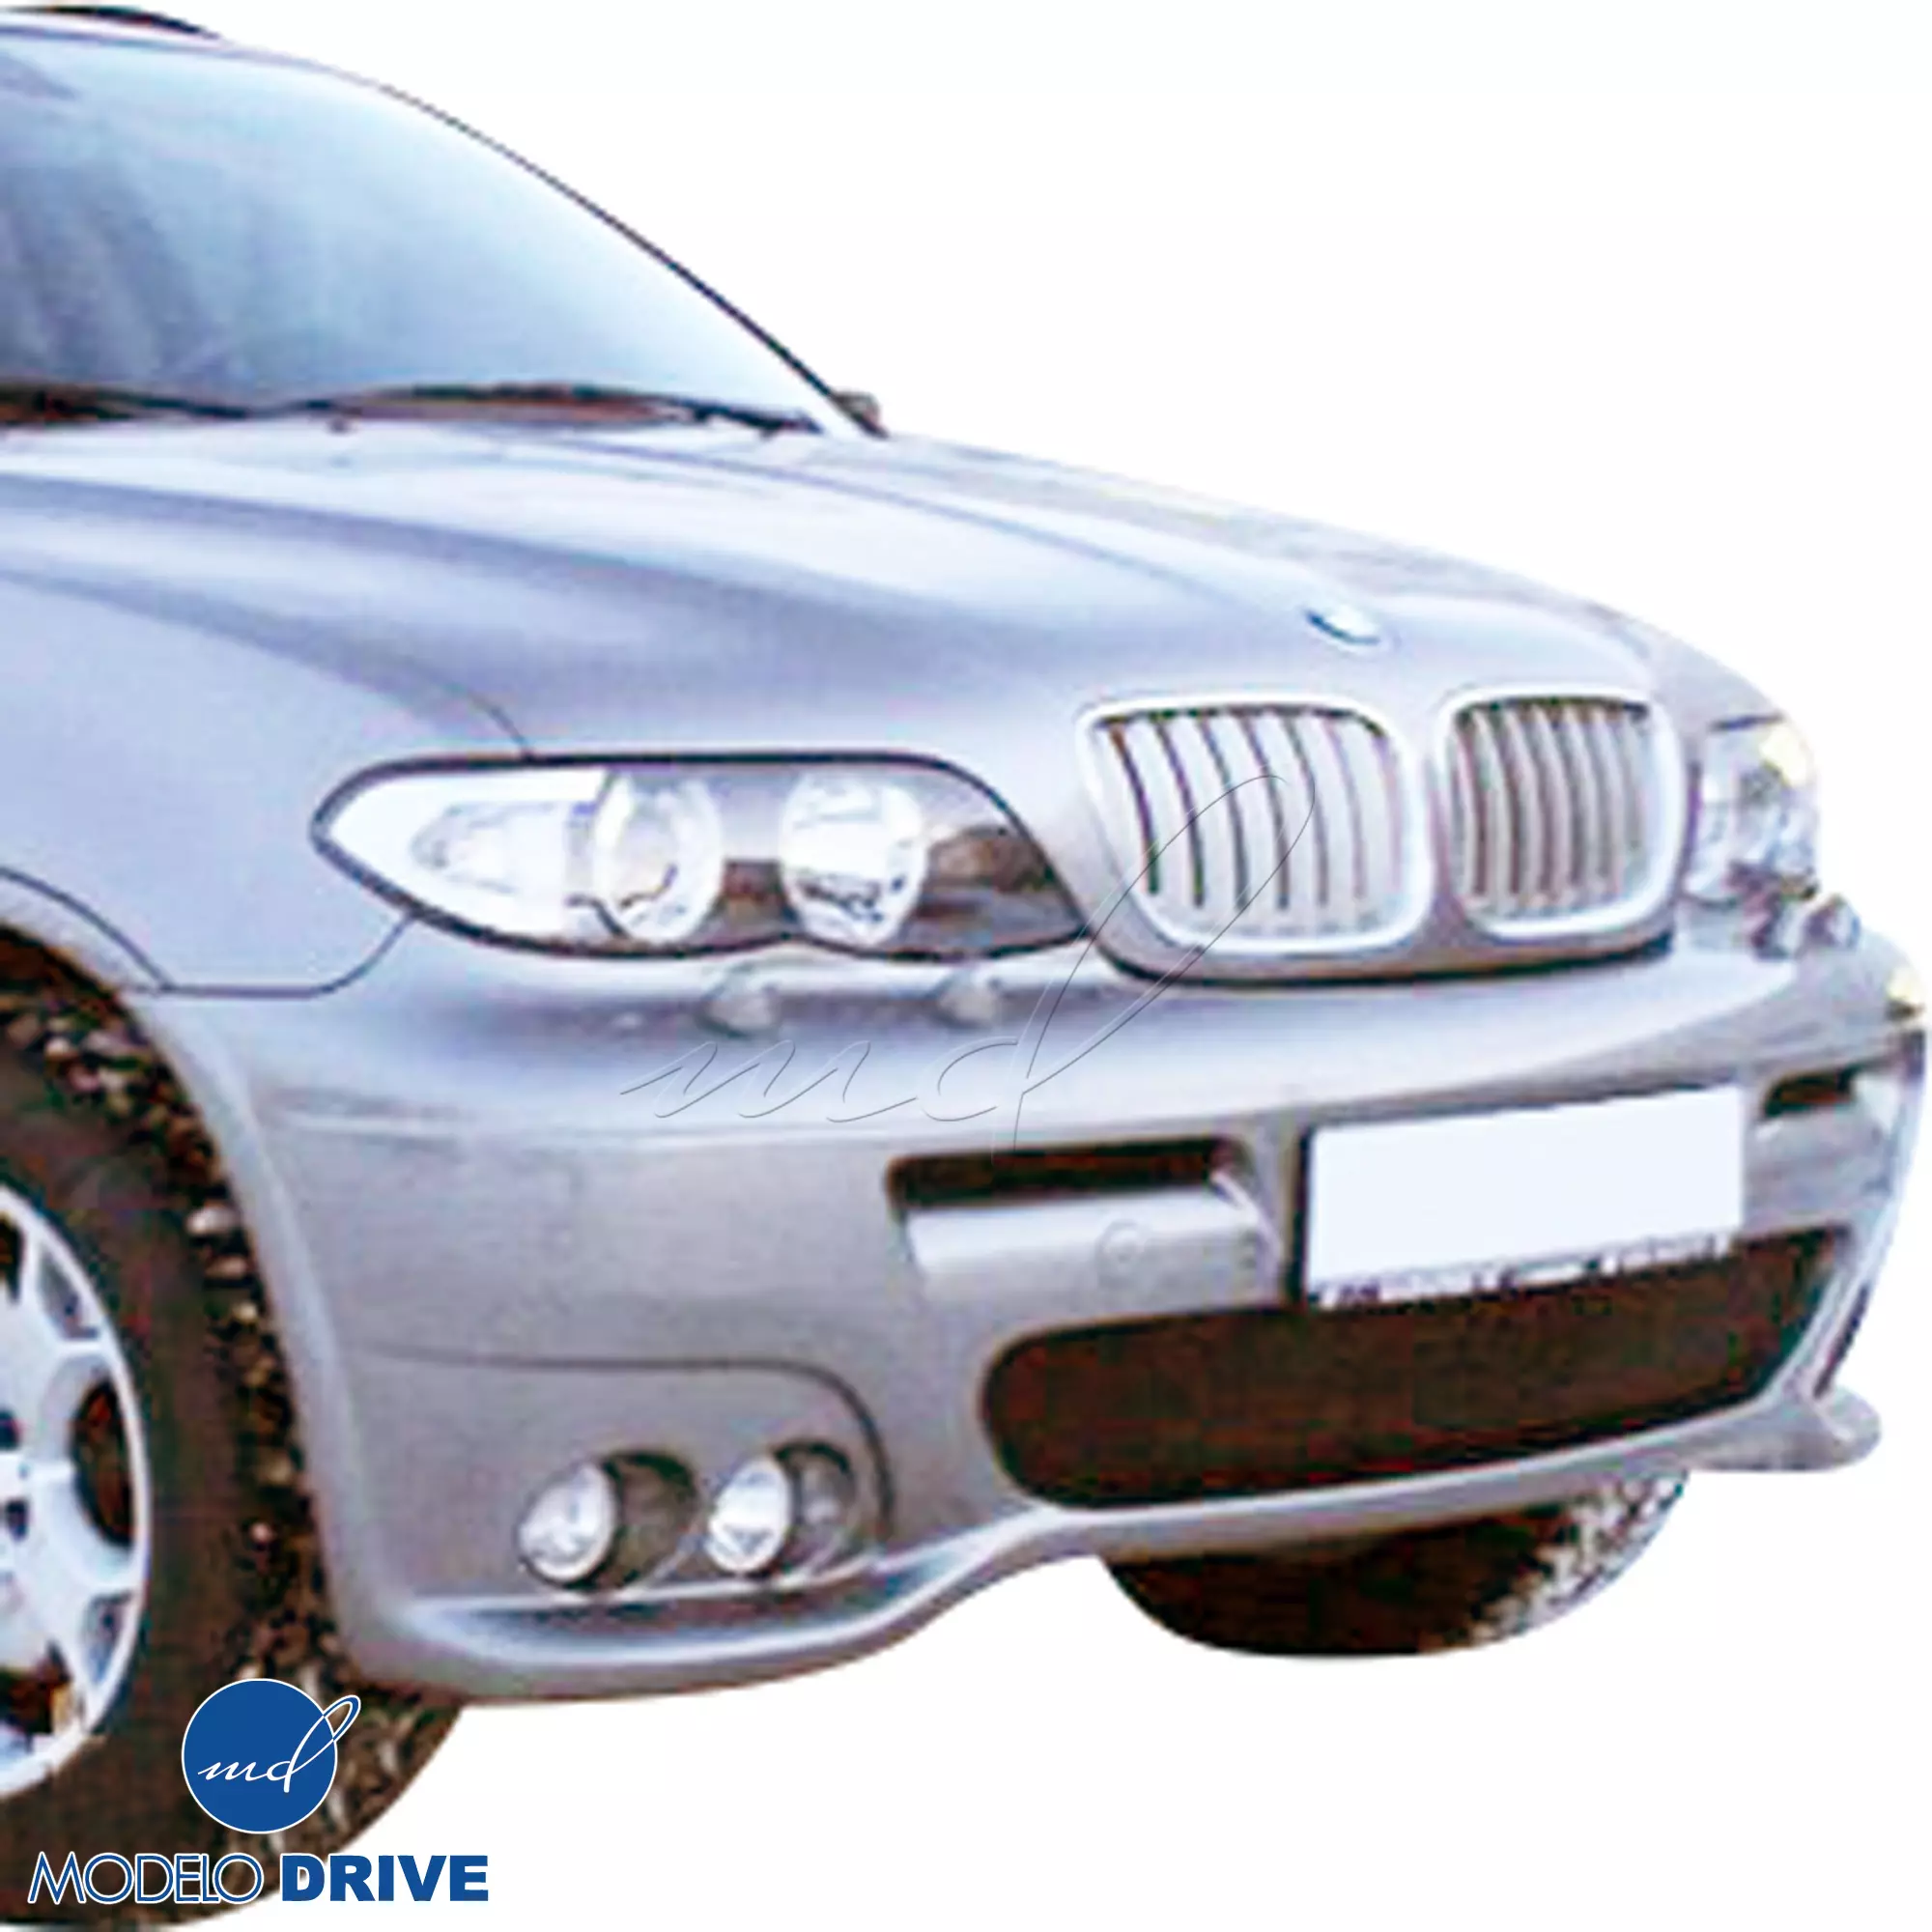 ModeloDrive FRP HAMA Front Bumper > BMW X5 E53 2000-2006 > 5dr - Image 12